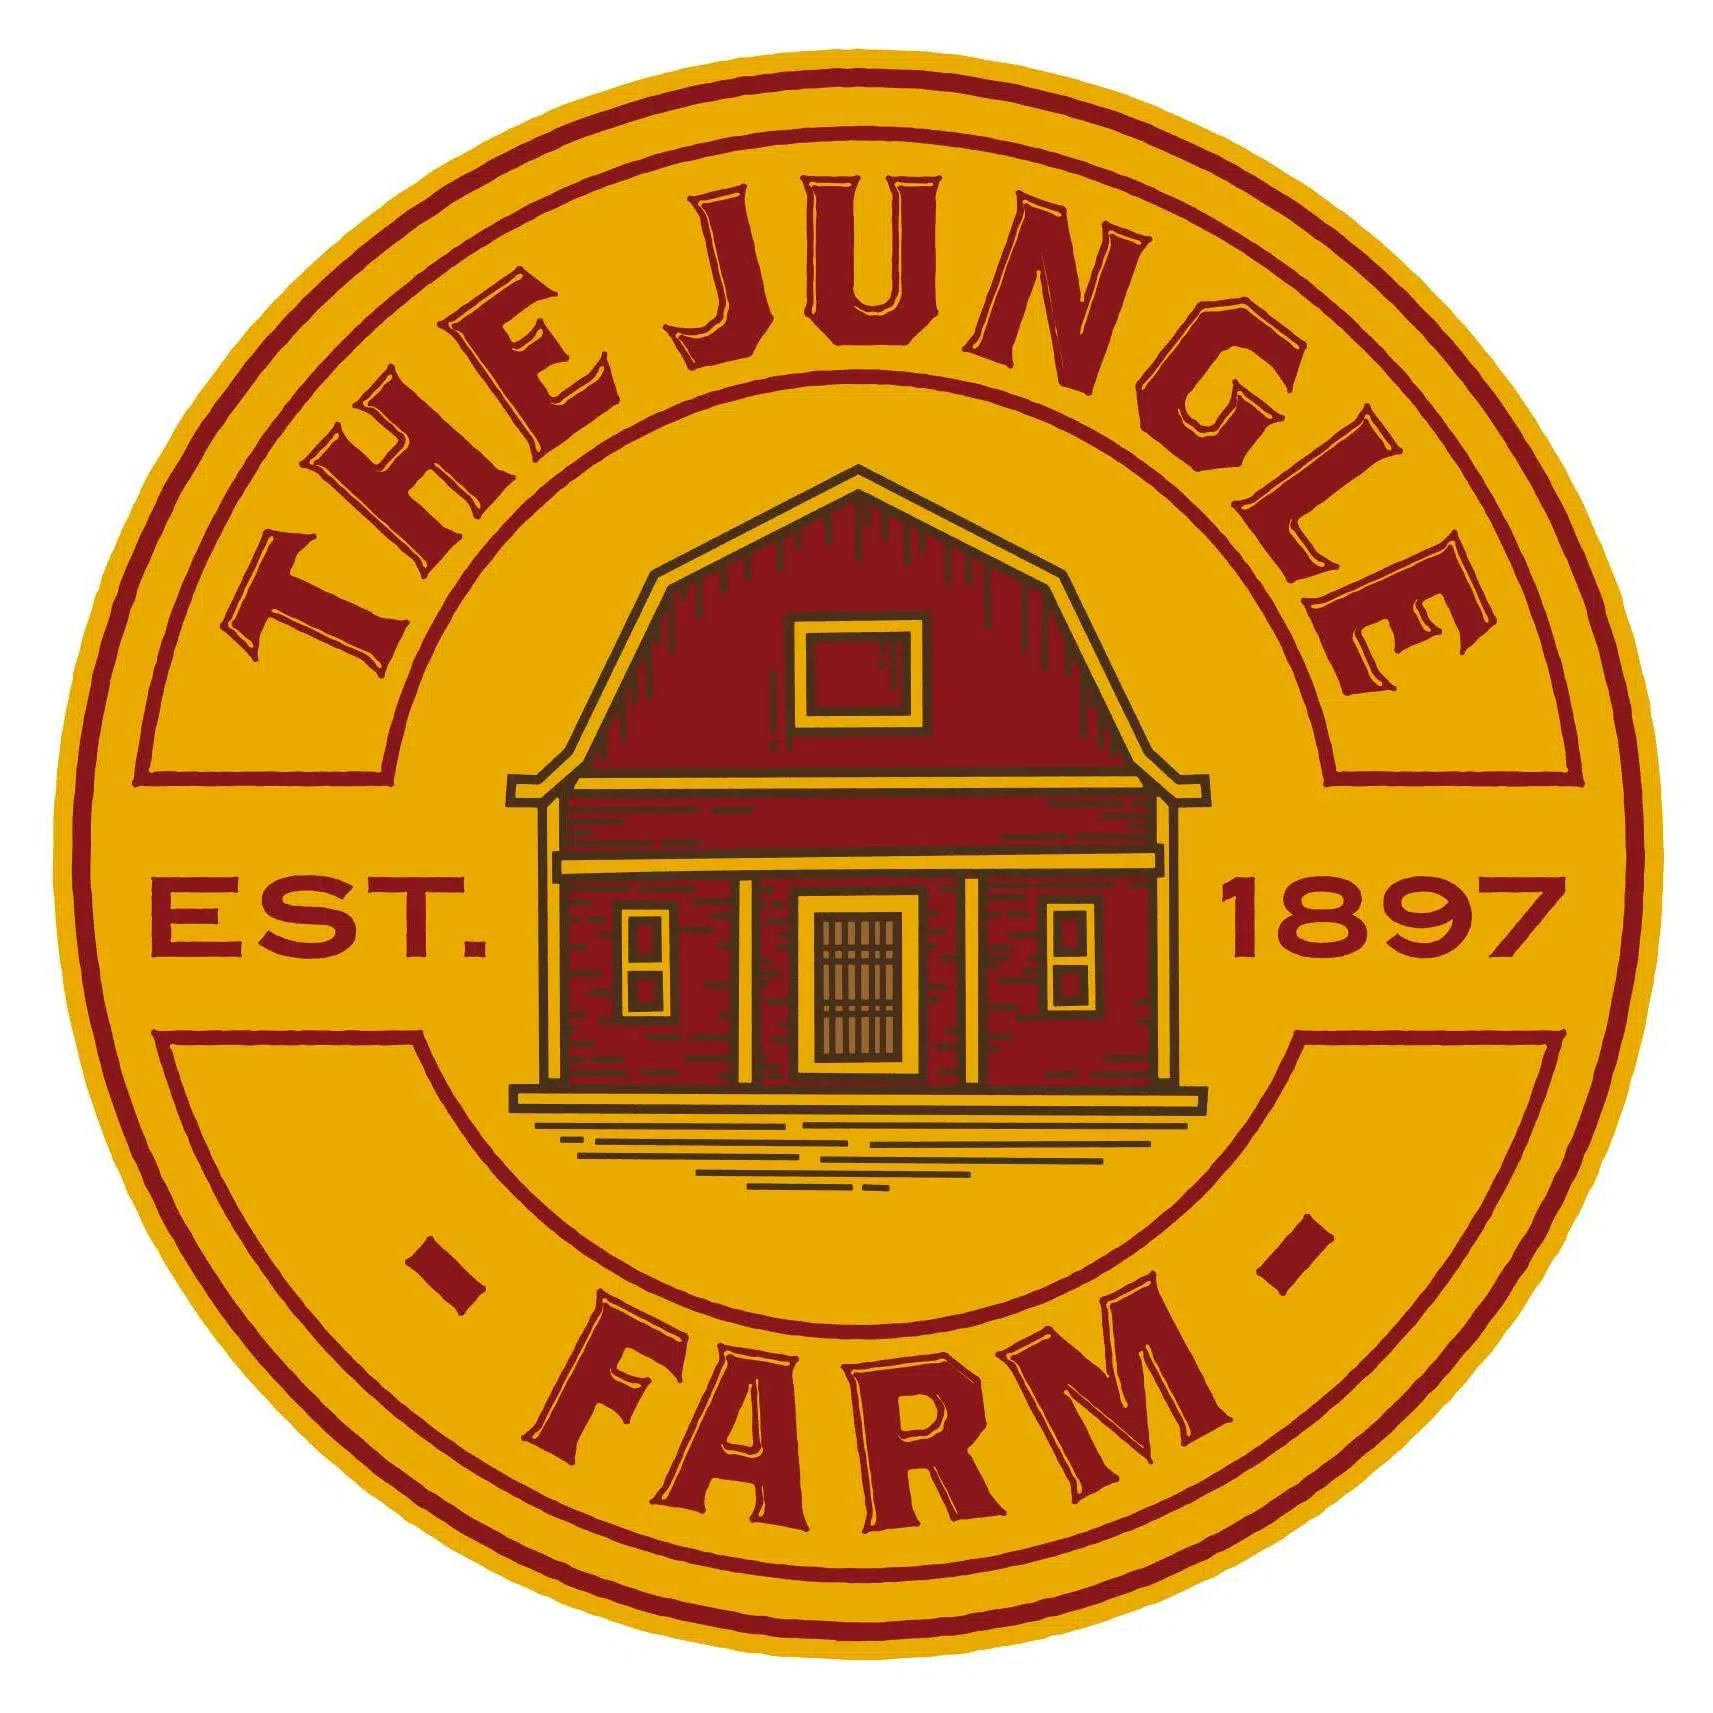 Jungle Farm